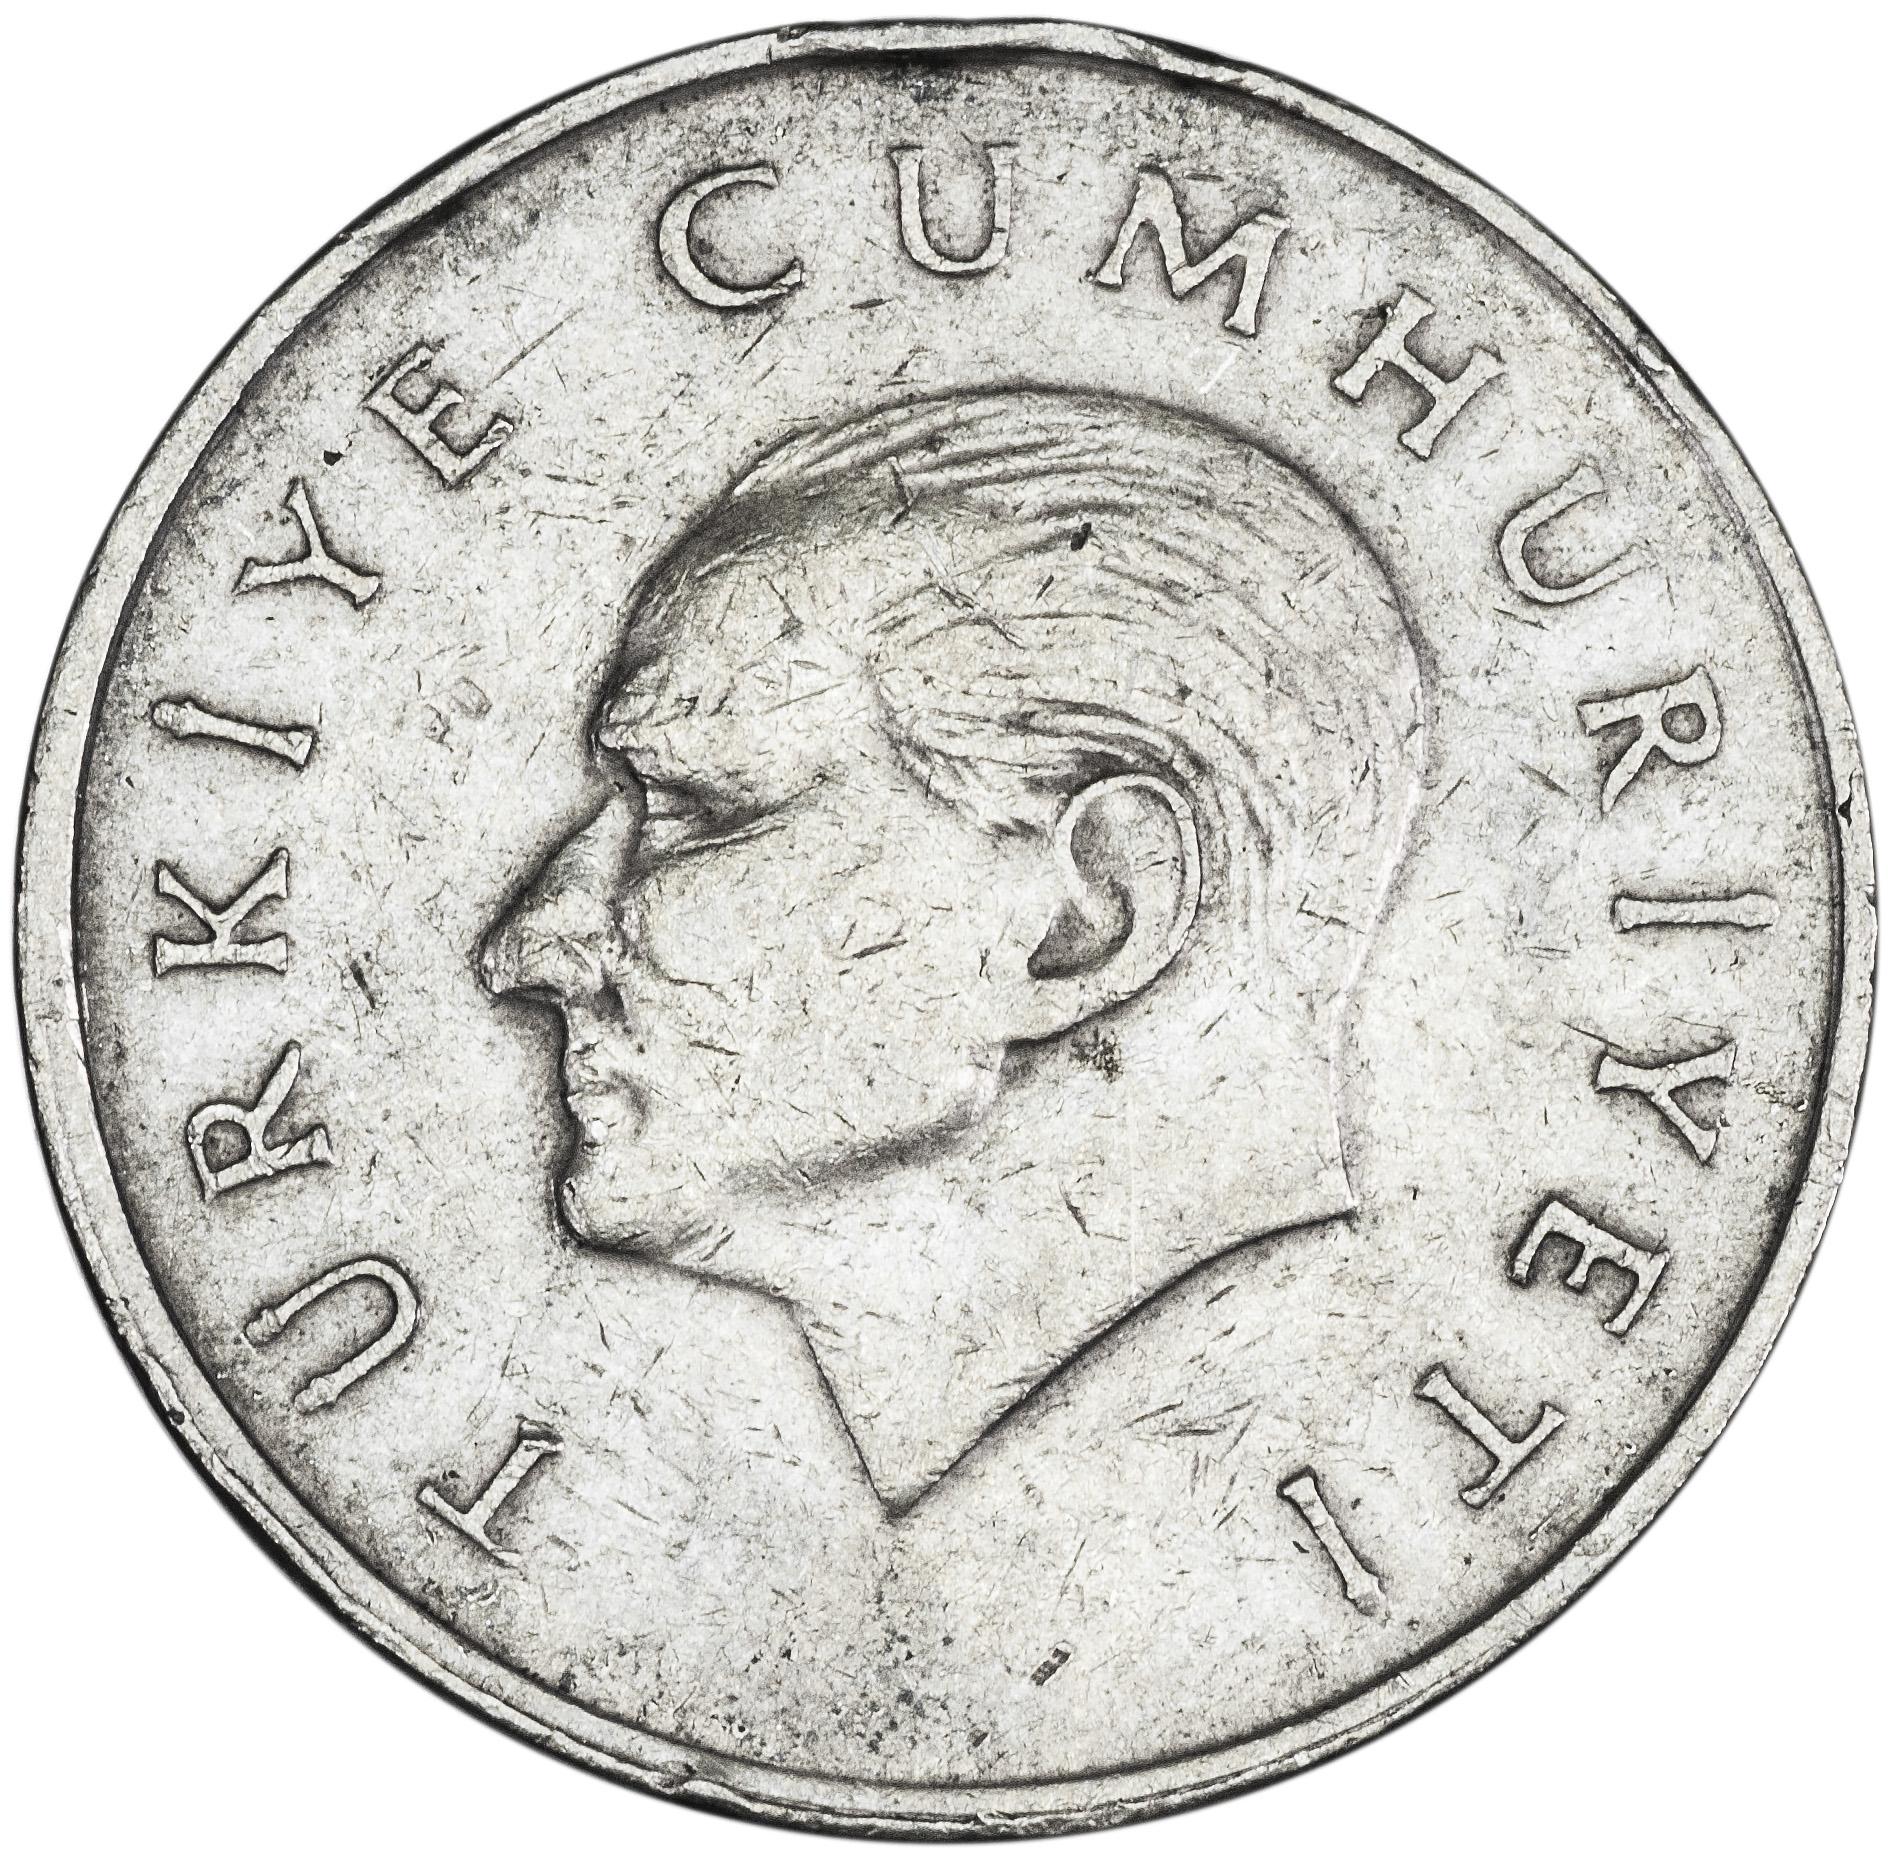 Монета 25000 лир Турция. 25000 Турецких лир. Монета Турции 25000 лир 1996 года. 25000 лир в рублях